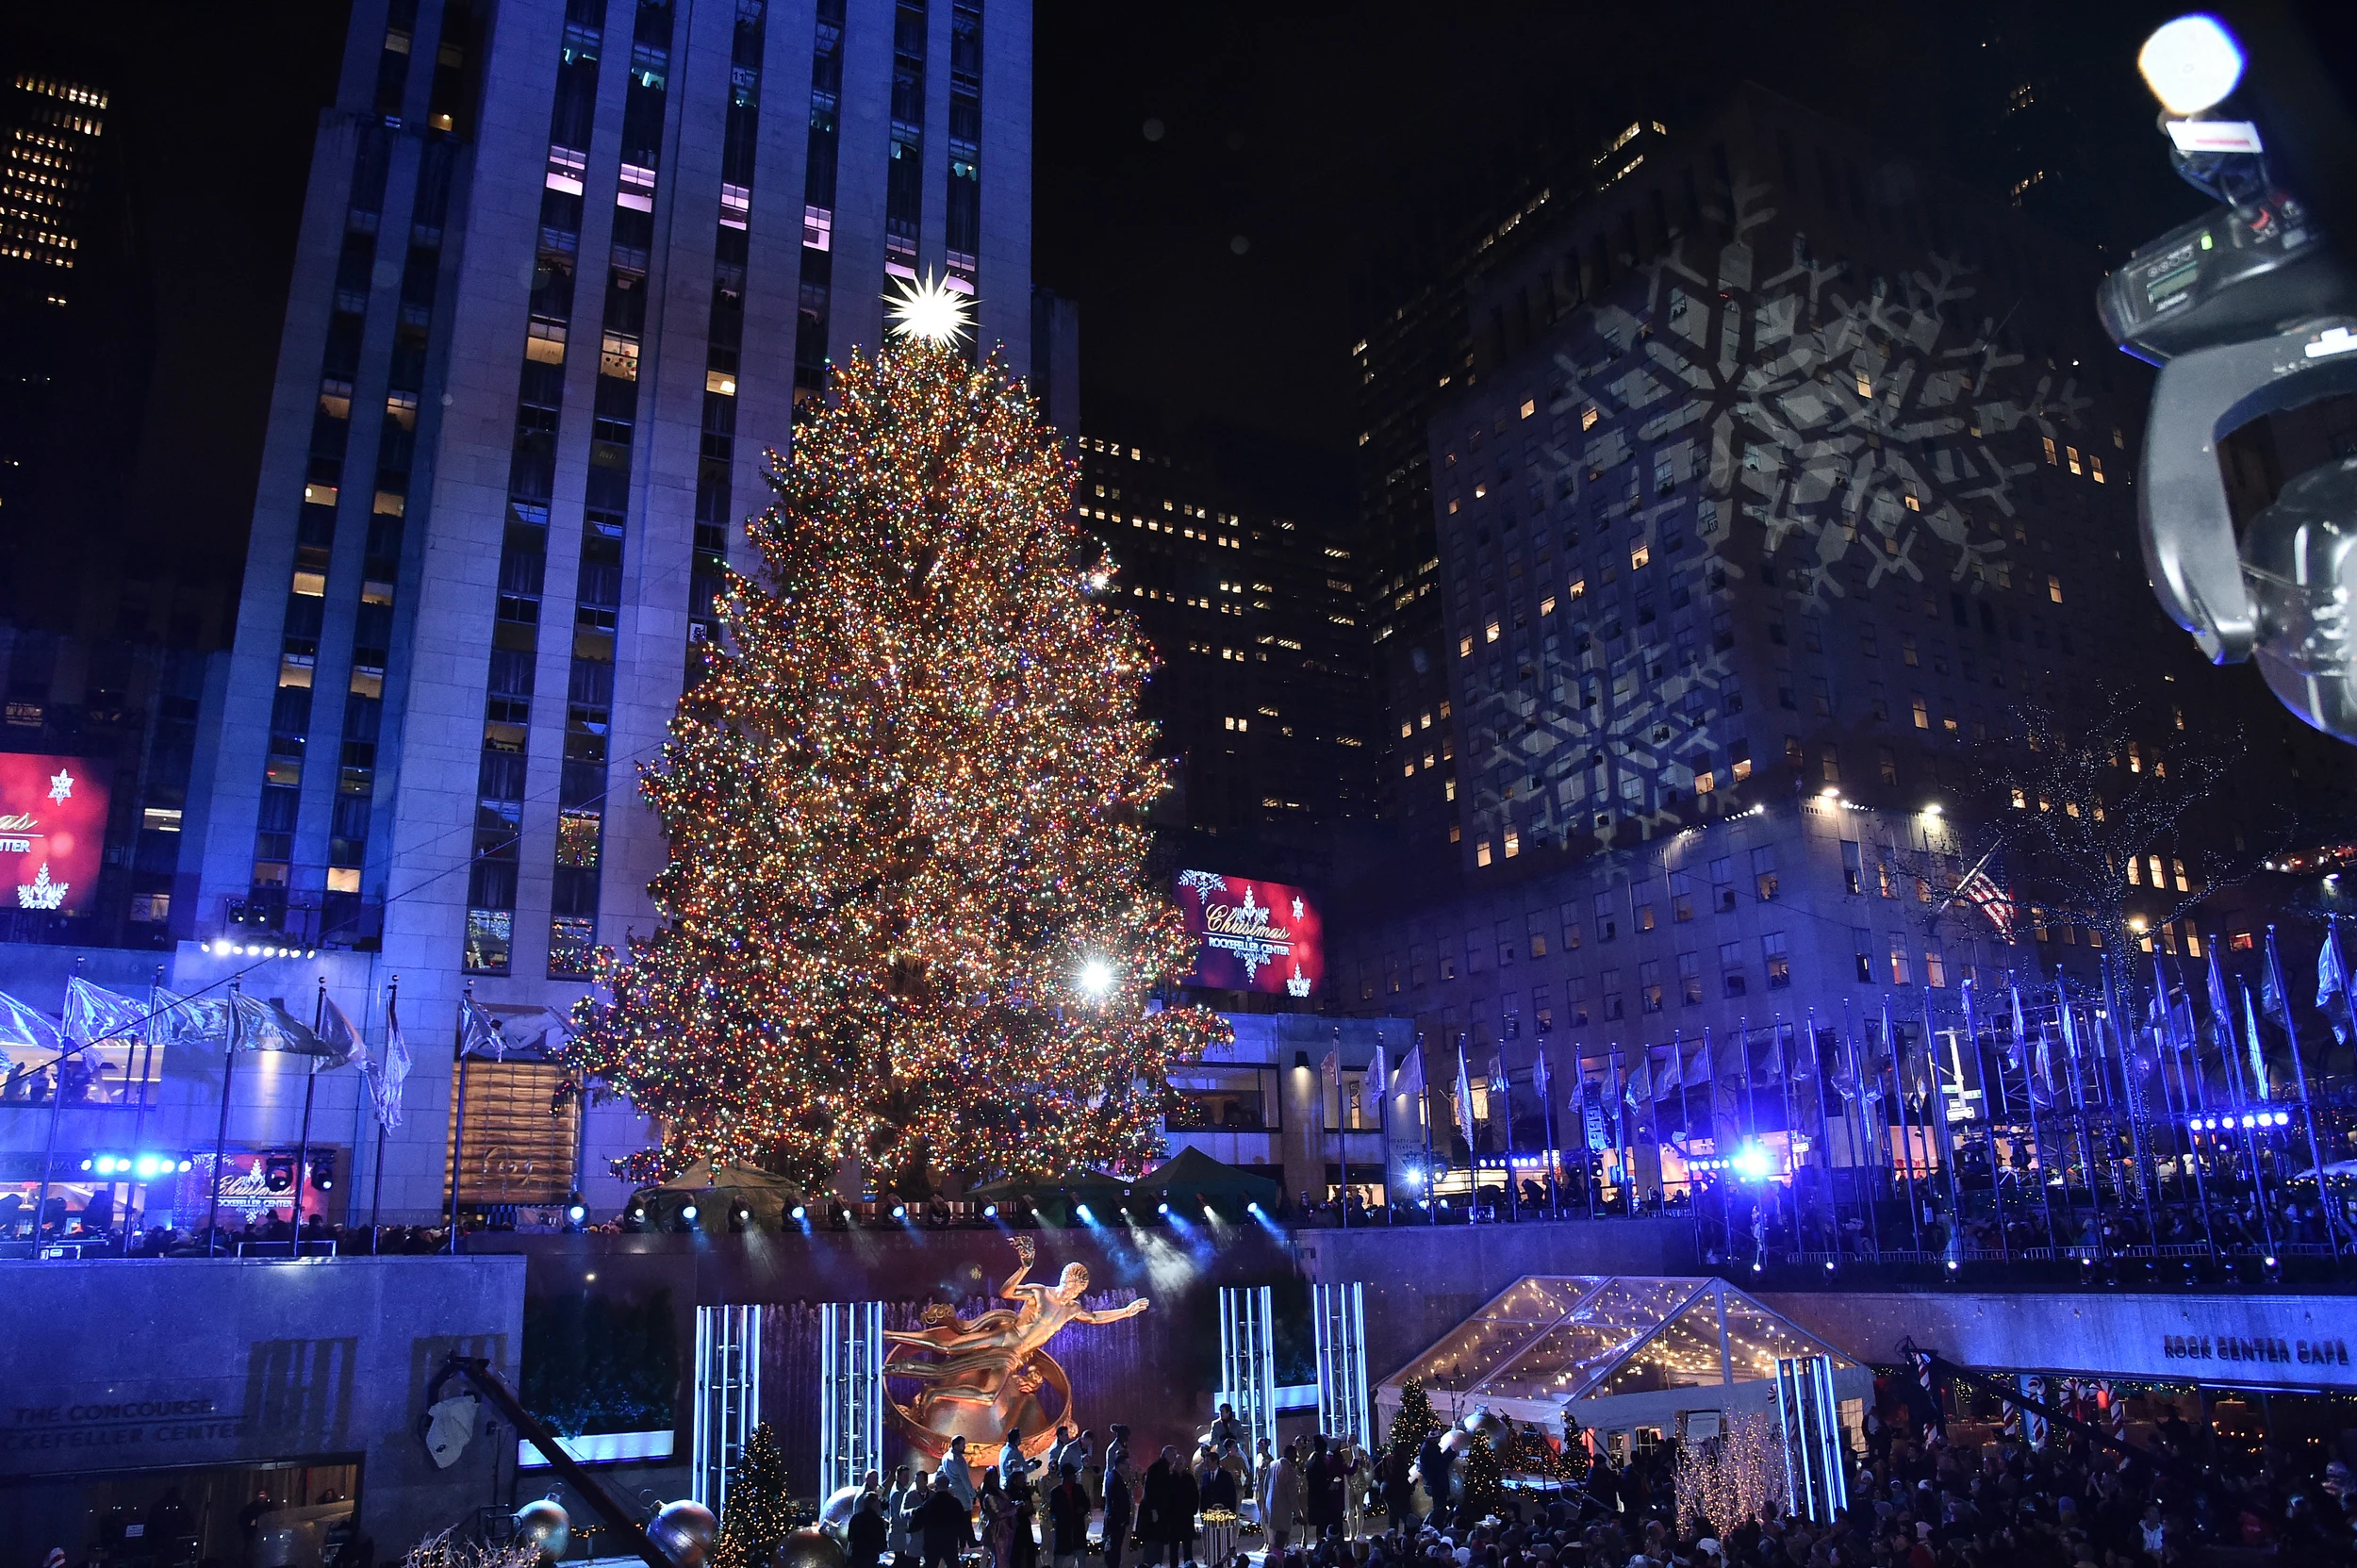 Rockefeller Christmas tree 2021 illuminated